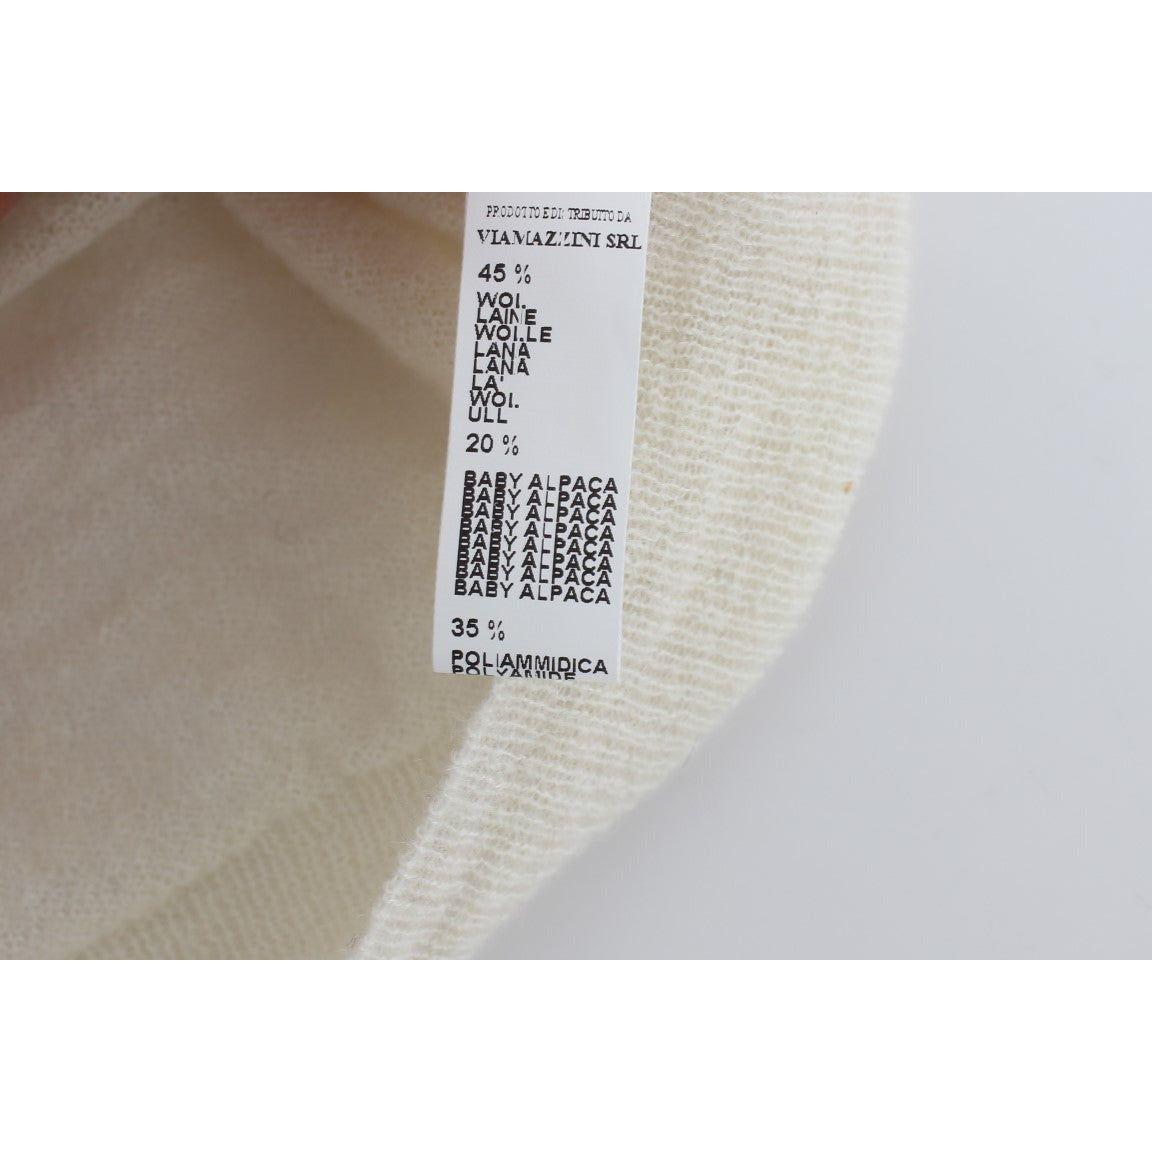 Ermanno Scervino Elegant White Crop Cardigan Sweater white-wool-blend-sweater-cardigan